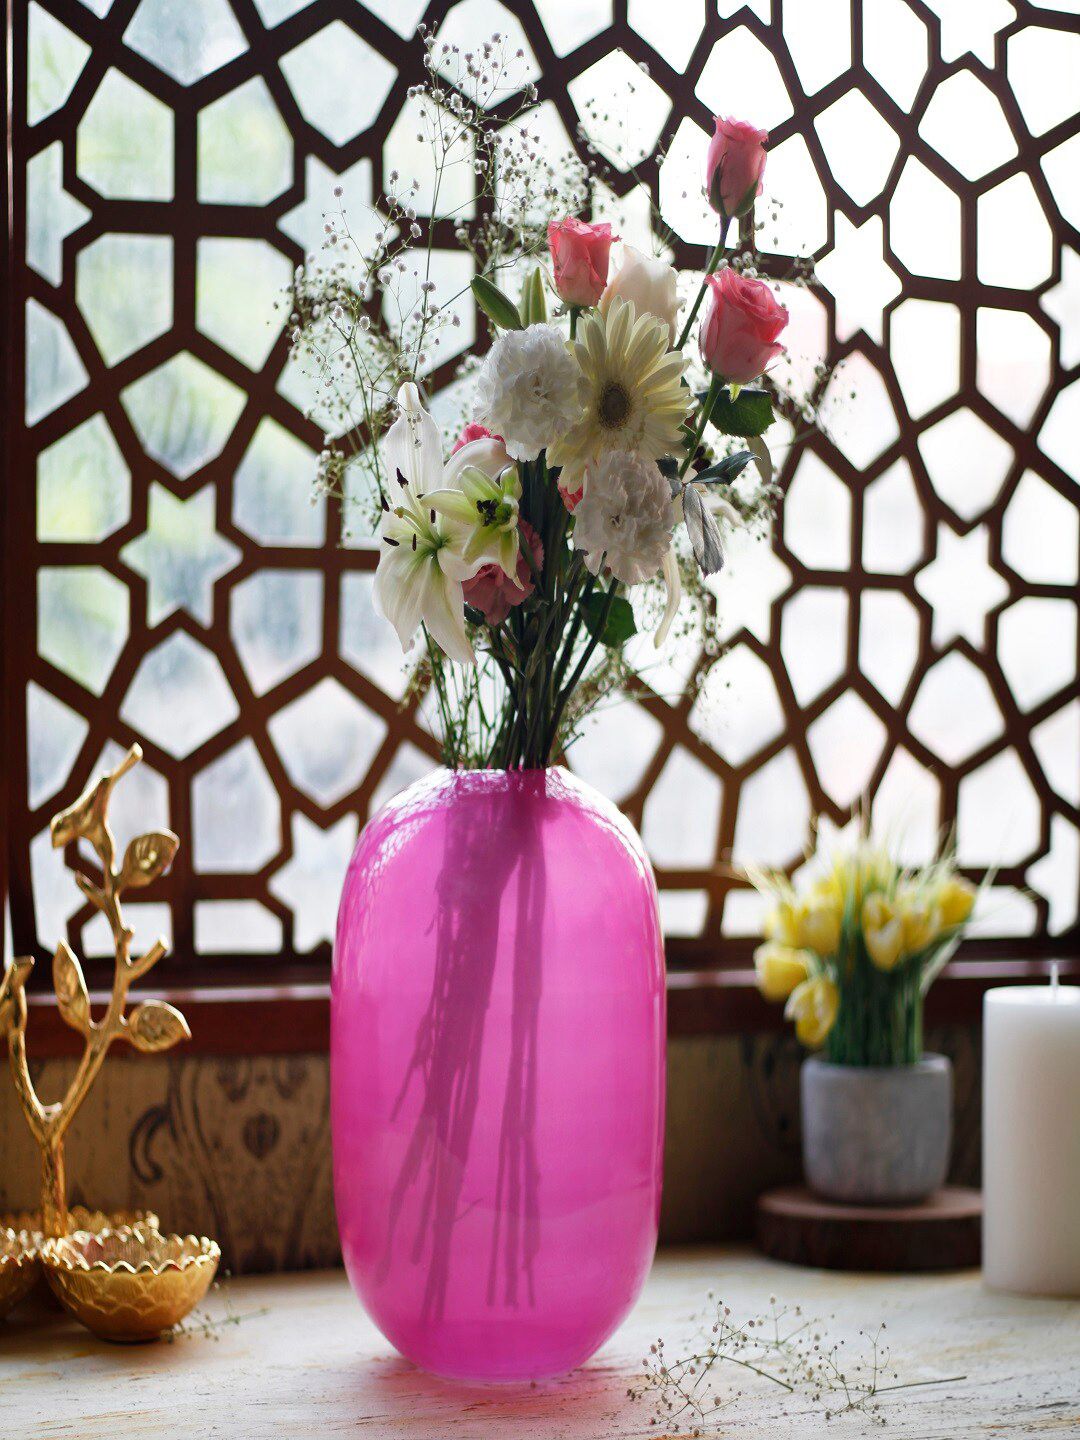 The 7 DeKor Pink Solid Glass Vase Price in India